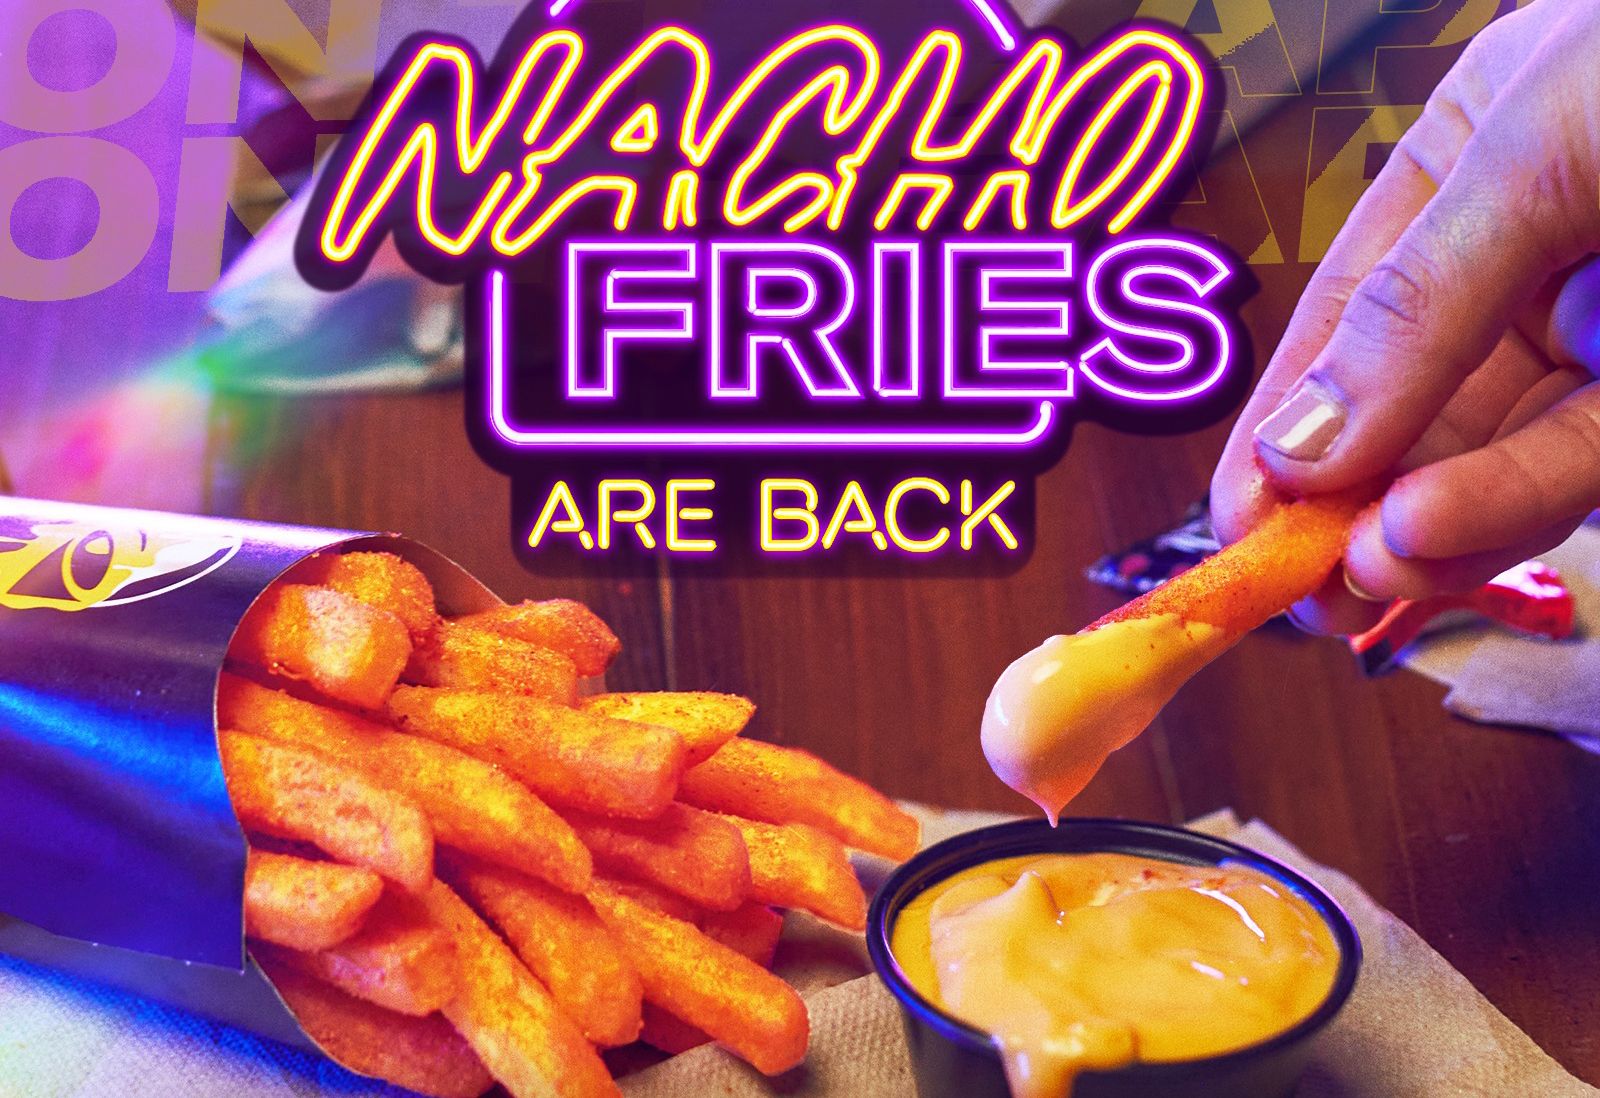 Classic Nacho Fries Make a Triumphant Return to Taco Bell